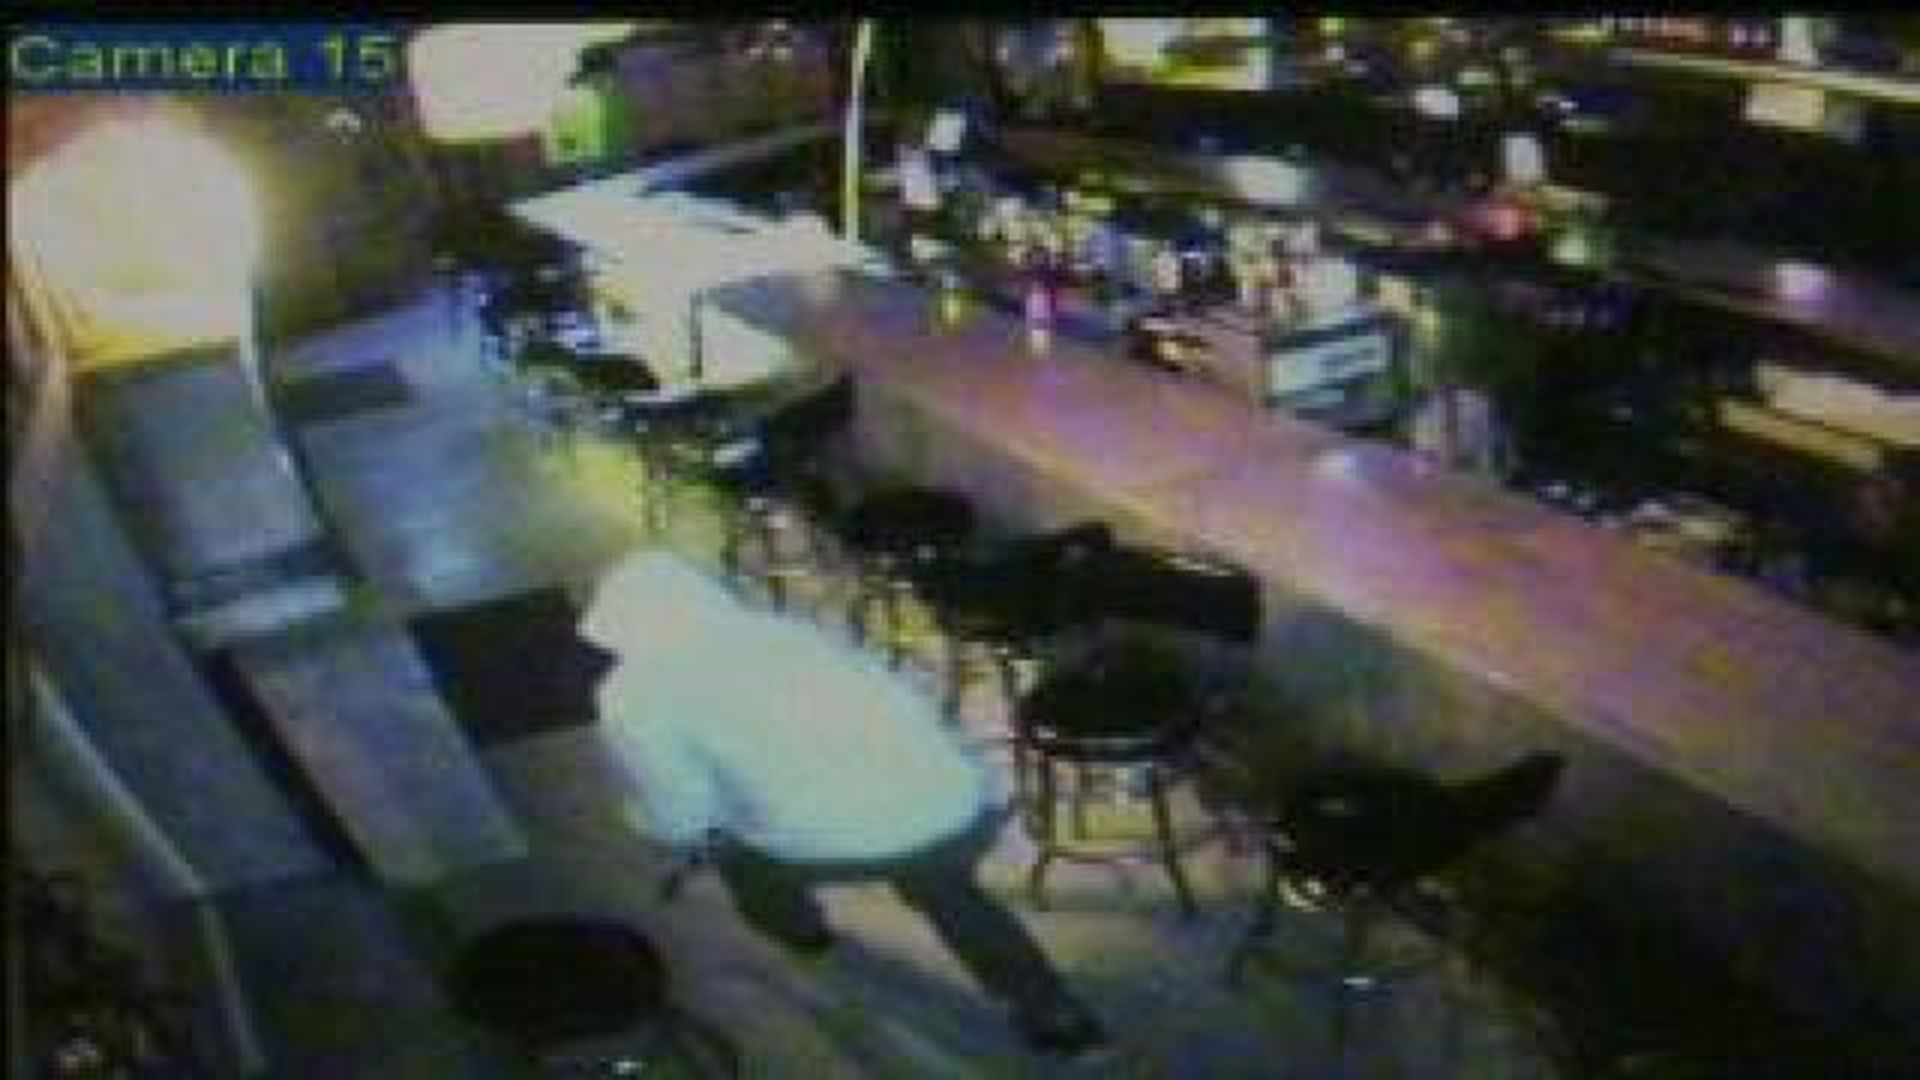 Thousands of Dollars Stolen from Restaurant